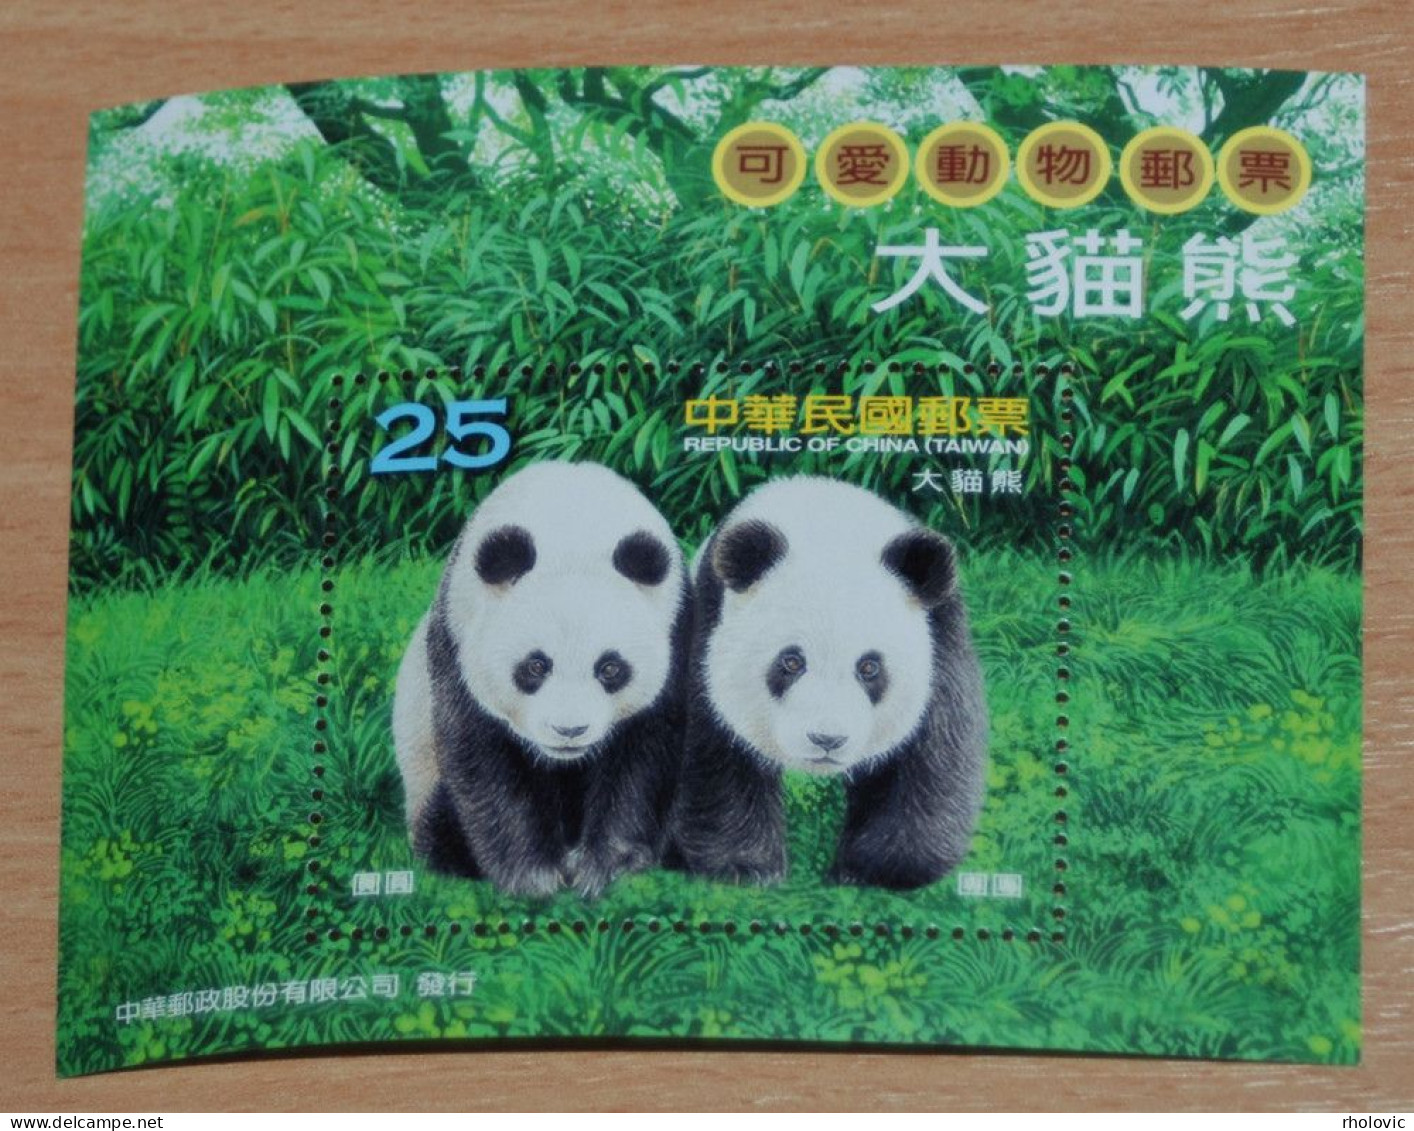 TAIWAN 2009, Panda, Bears, Animals, Fauna, Mi #B146, Souvenir Sheet, MNH** - Bears